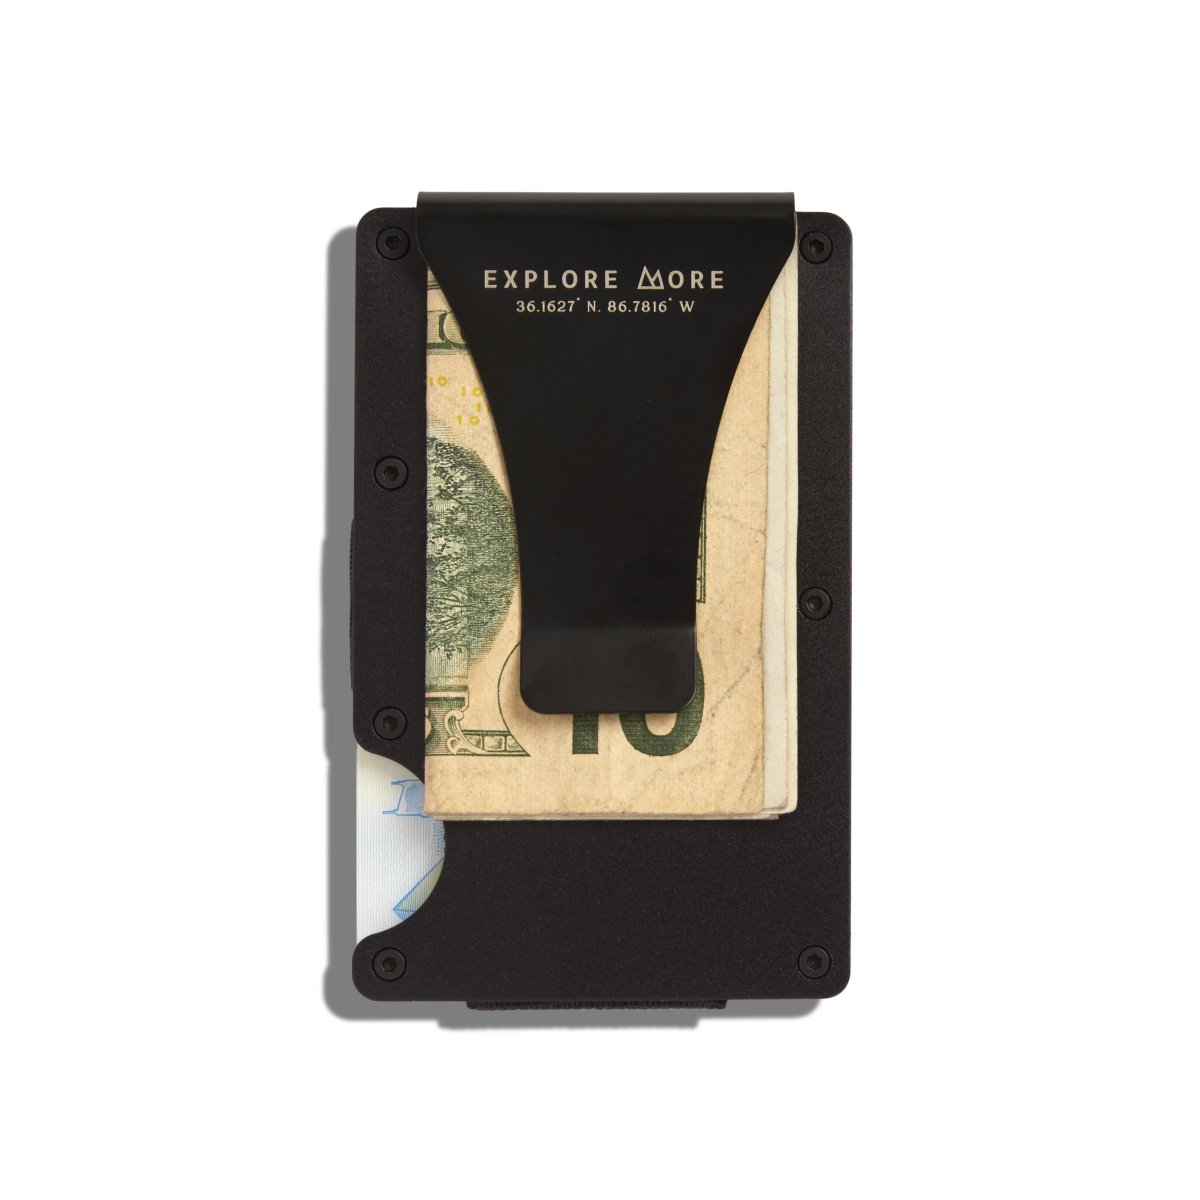 Black RFID Adventure Wallet - Roosevelt Supply Co.